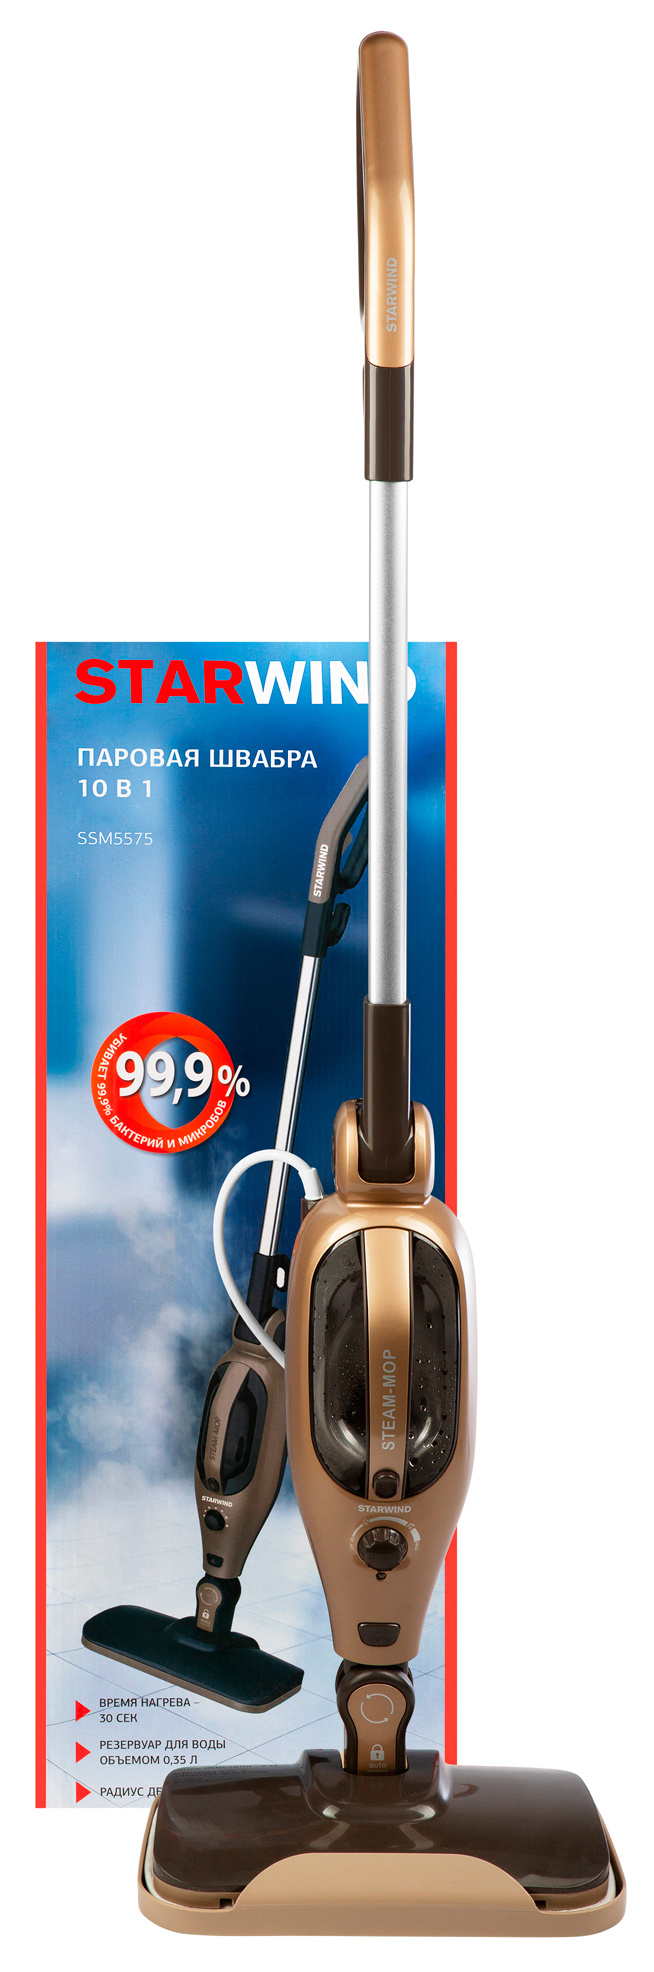 Паровая швабра Starwind SSM5575 золотистый/темно-серый от магазина Старвинд